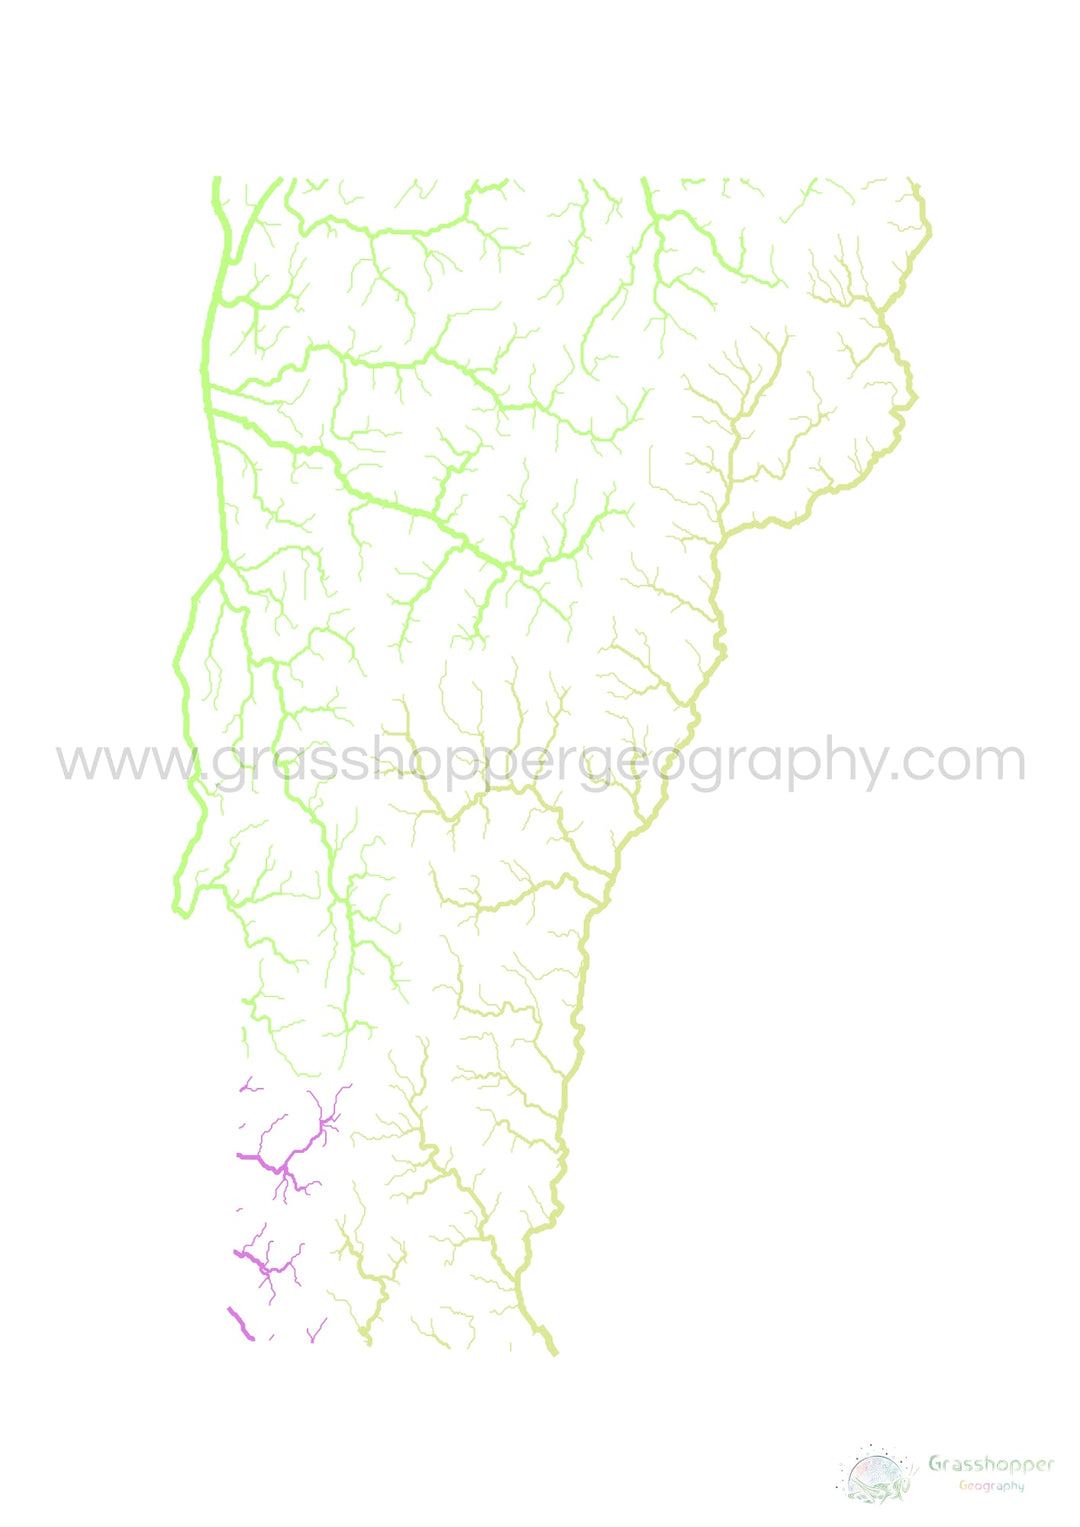 Vermont - River basin map, pastel on white - Fine Art Print